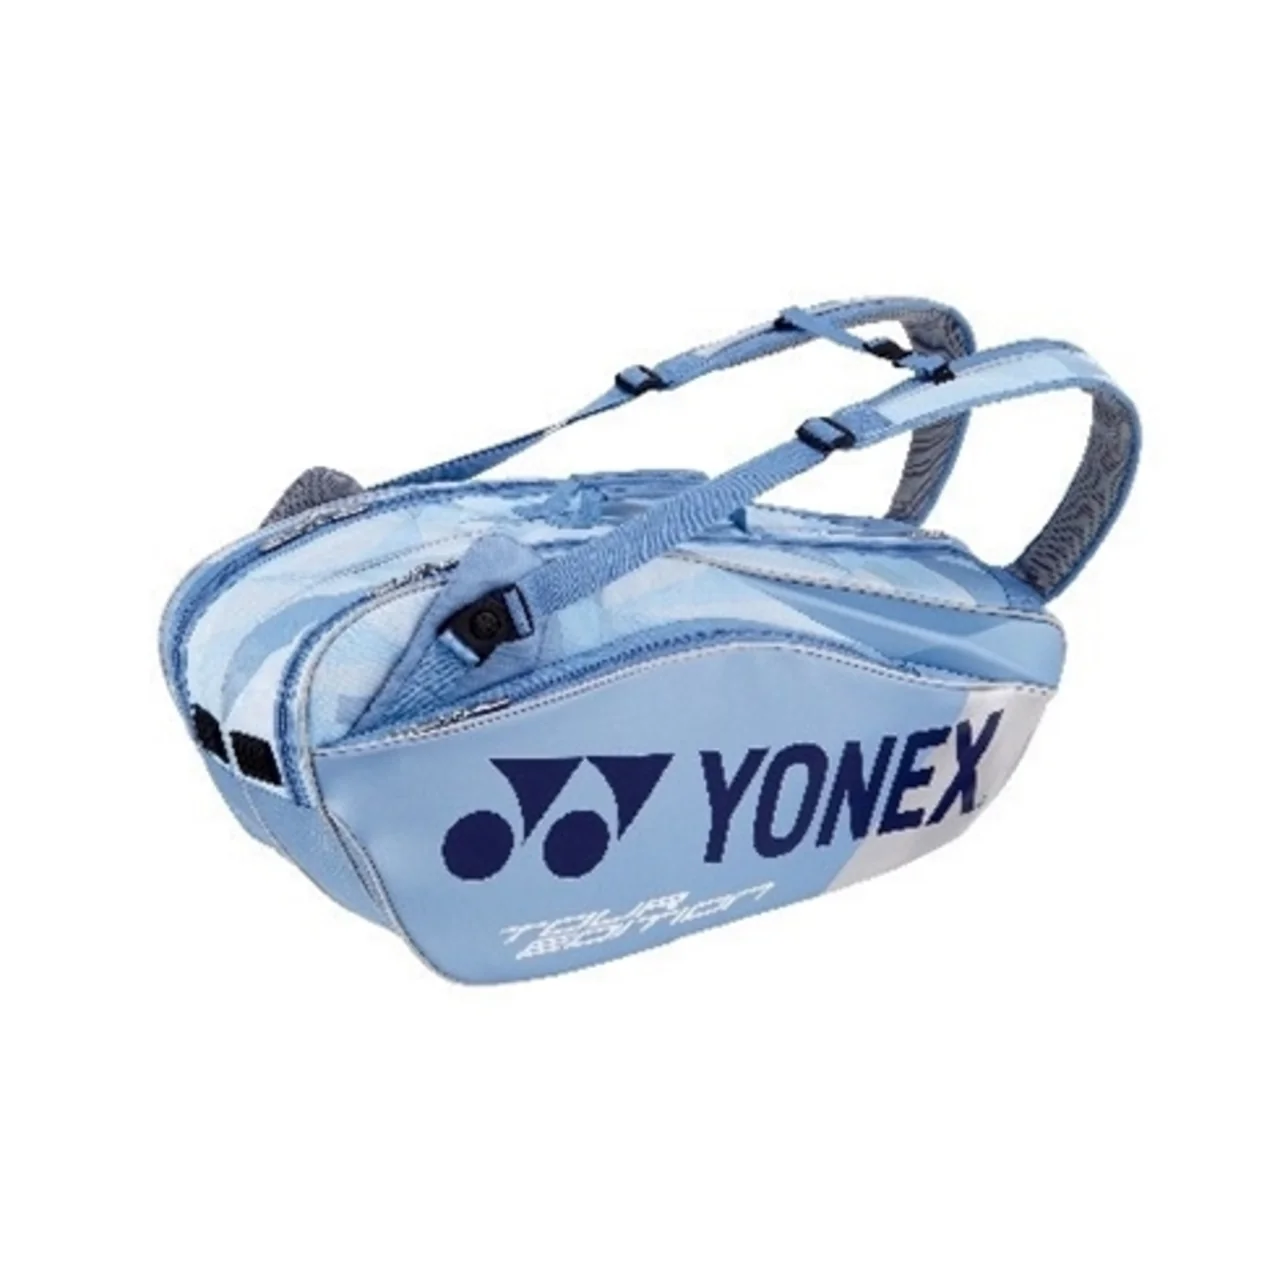 Yonex Pro Bag x6 Clear Blue